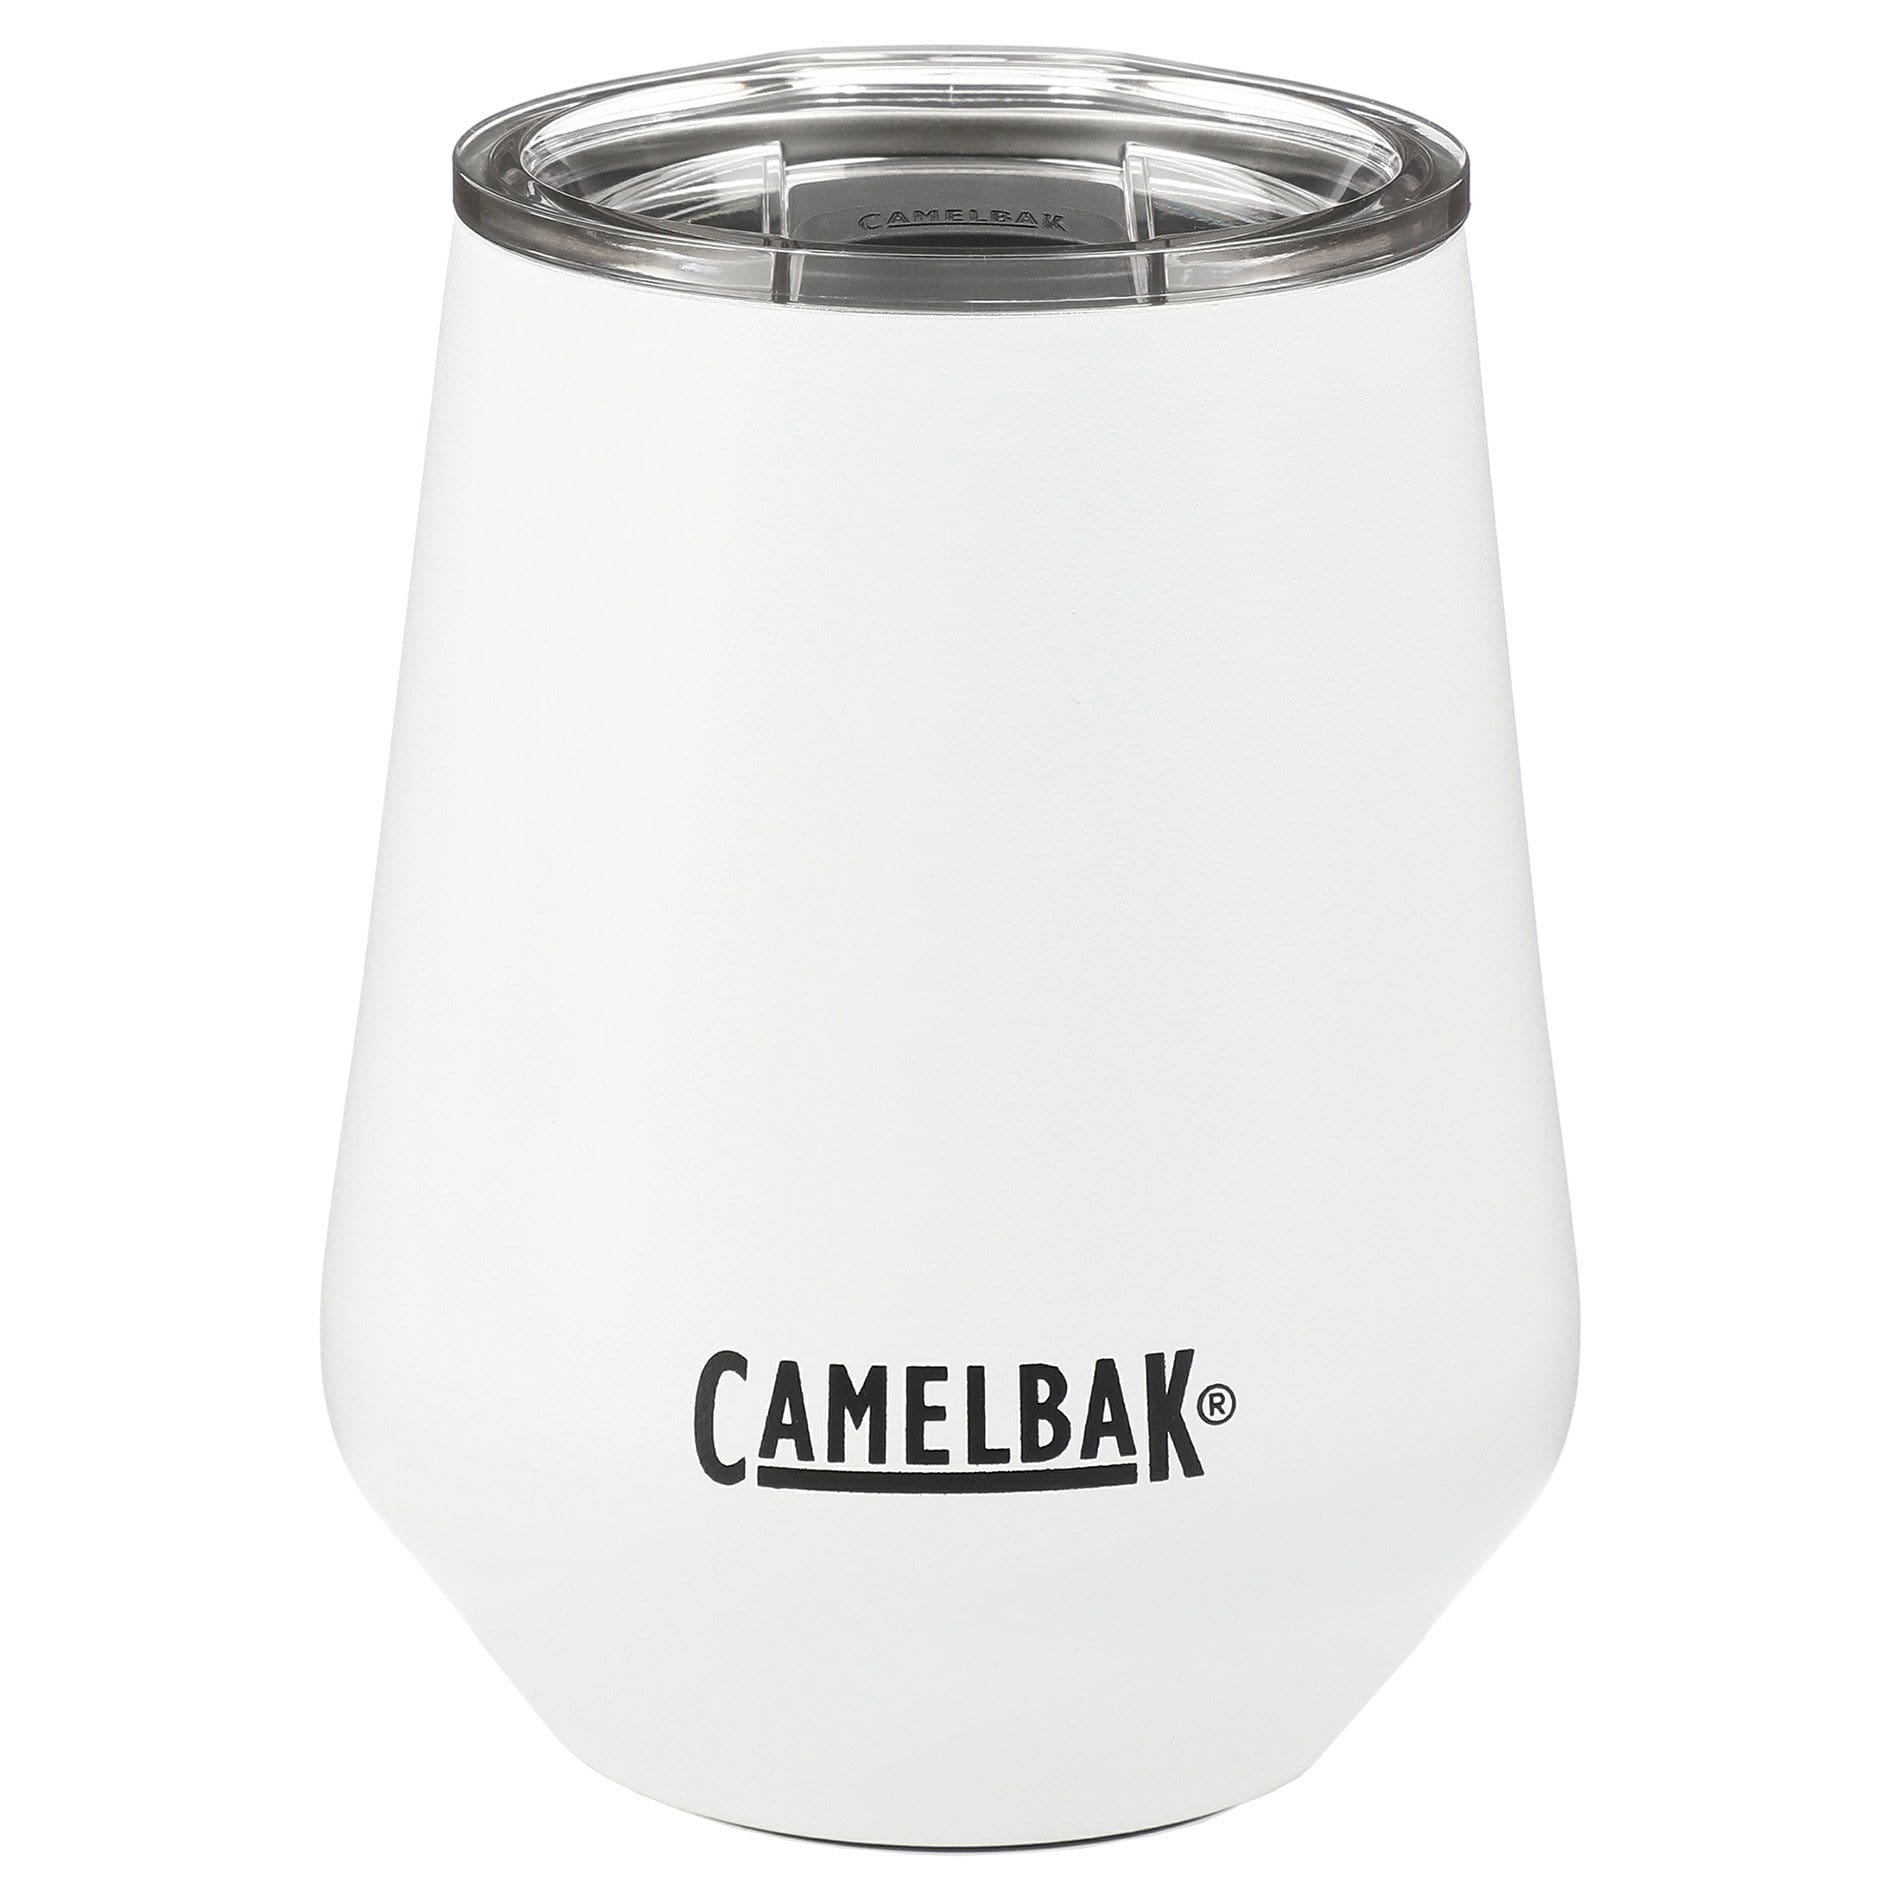 Camelbak Accessories 12oz / White CamelBak - Wine Tumbler 12oz